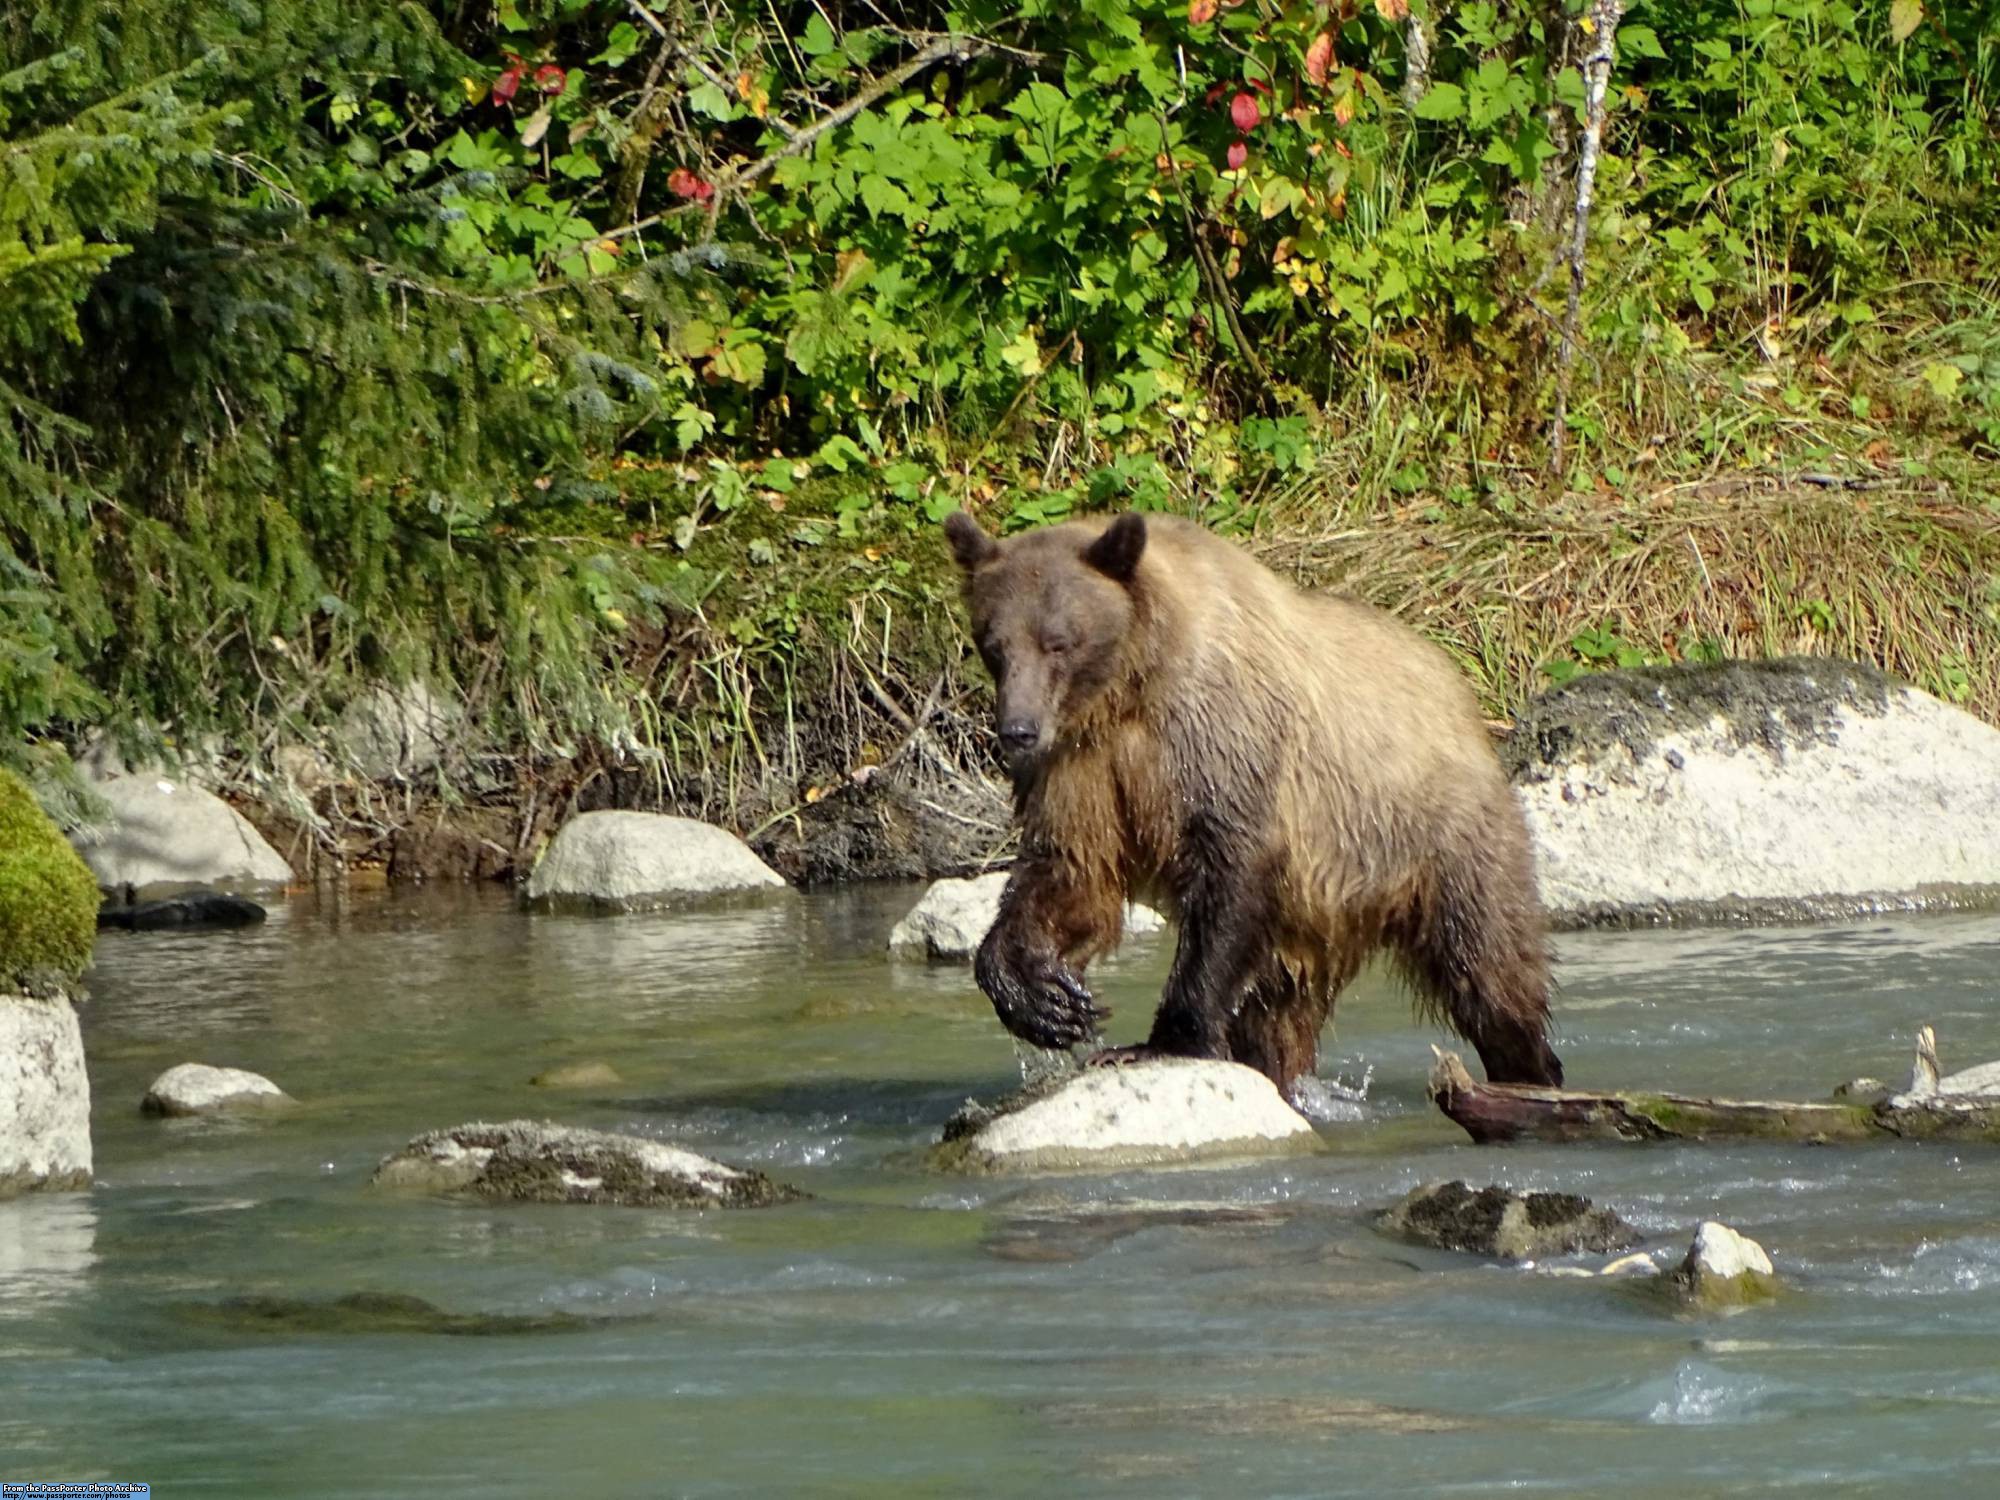 Experience the wildlife of Skagway, Alaska on your Disney Cruise | PassPorter.com